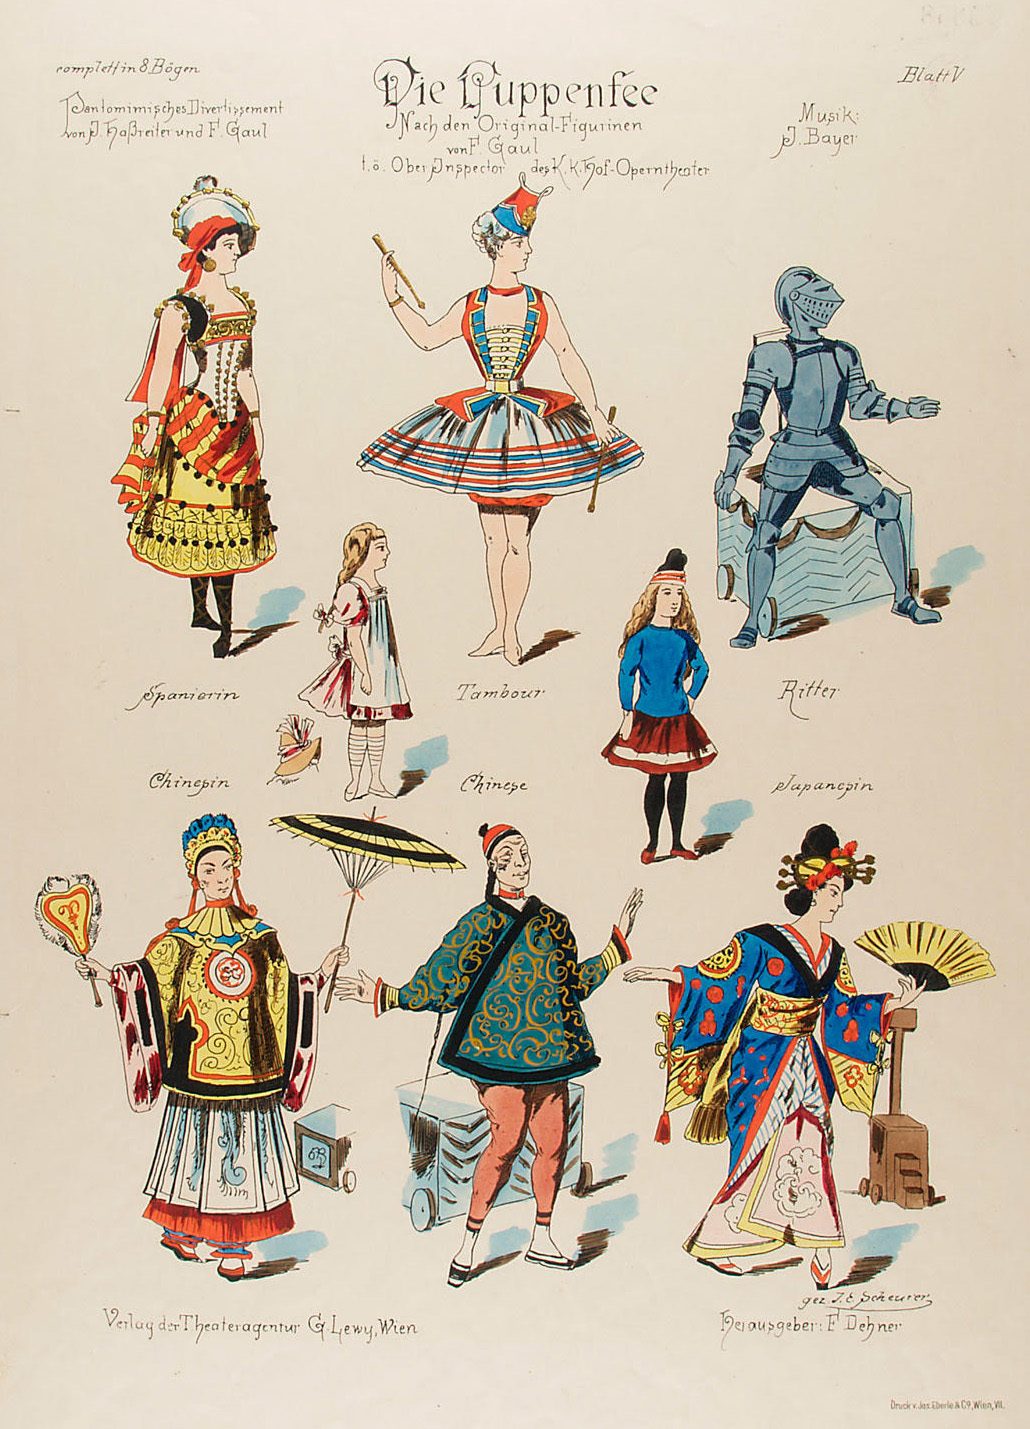 Poster of original costume sketches